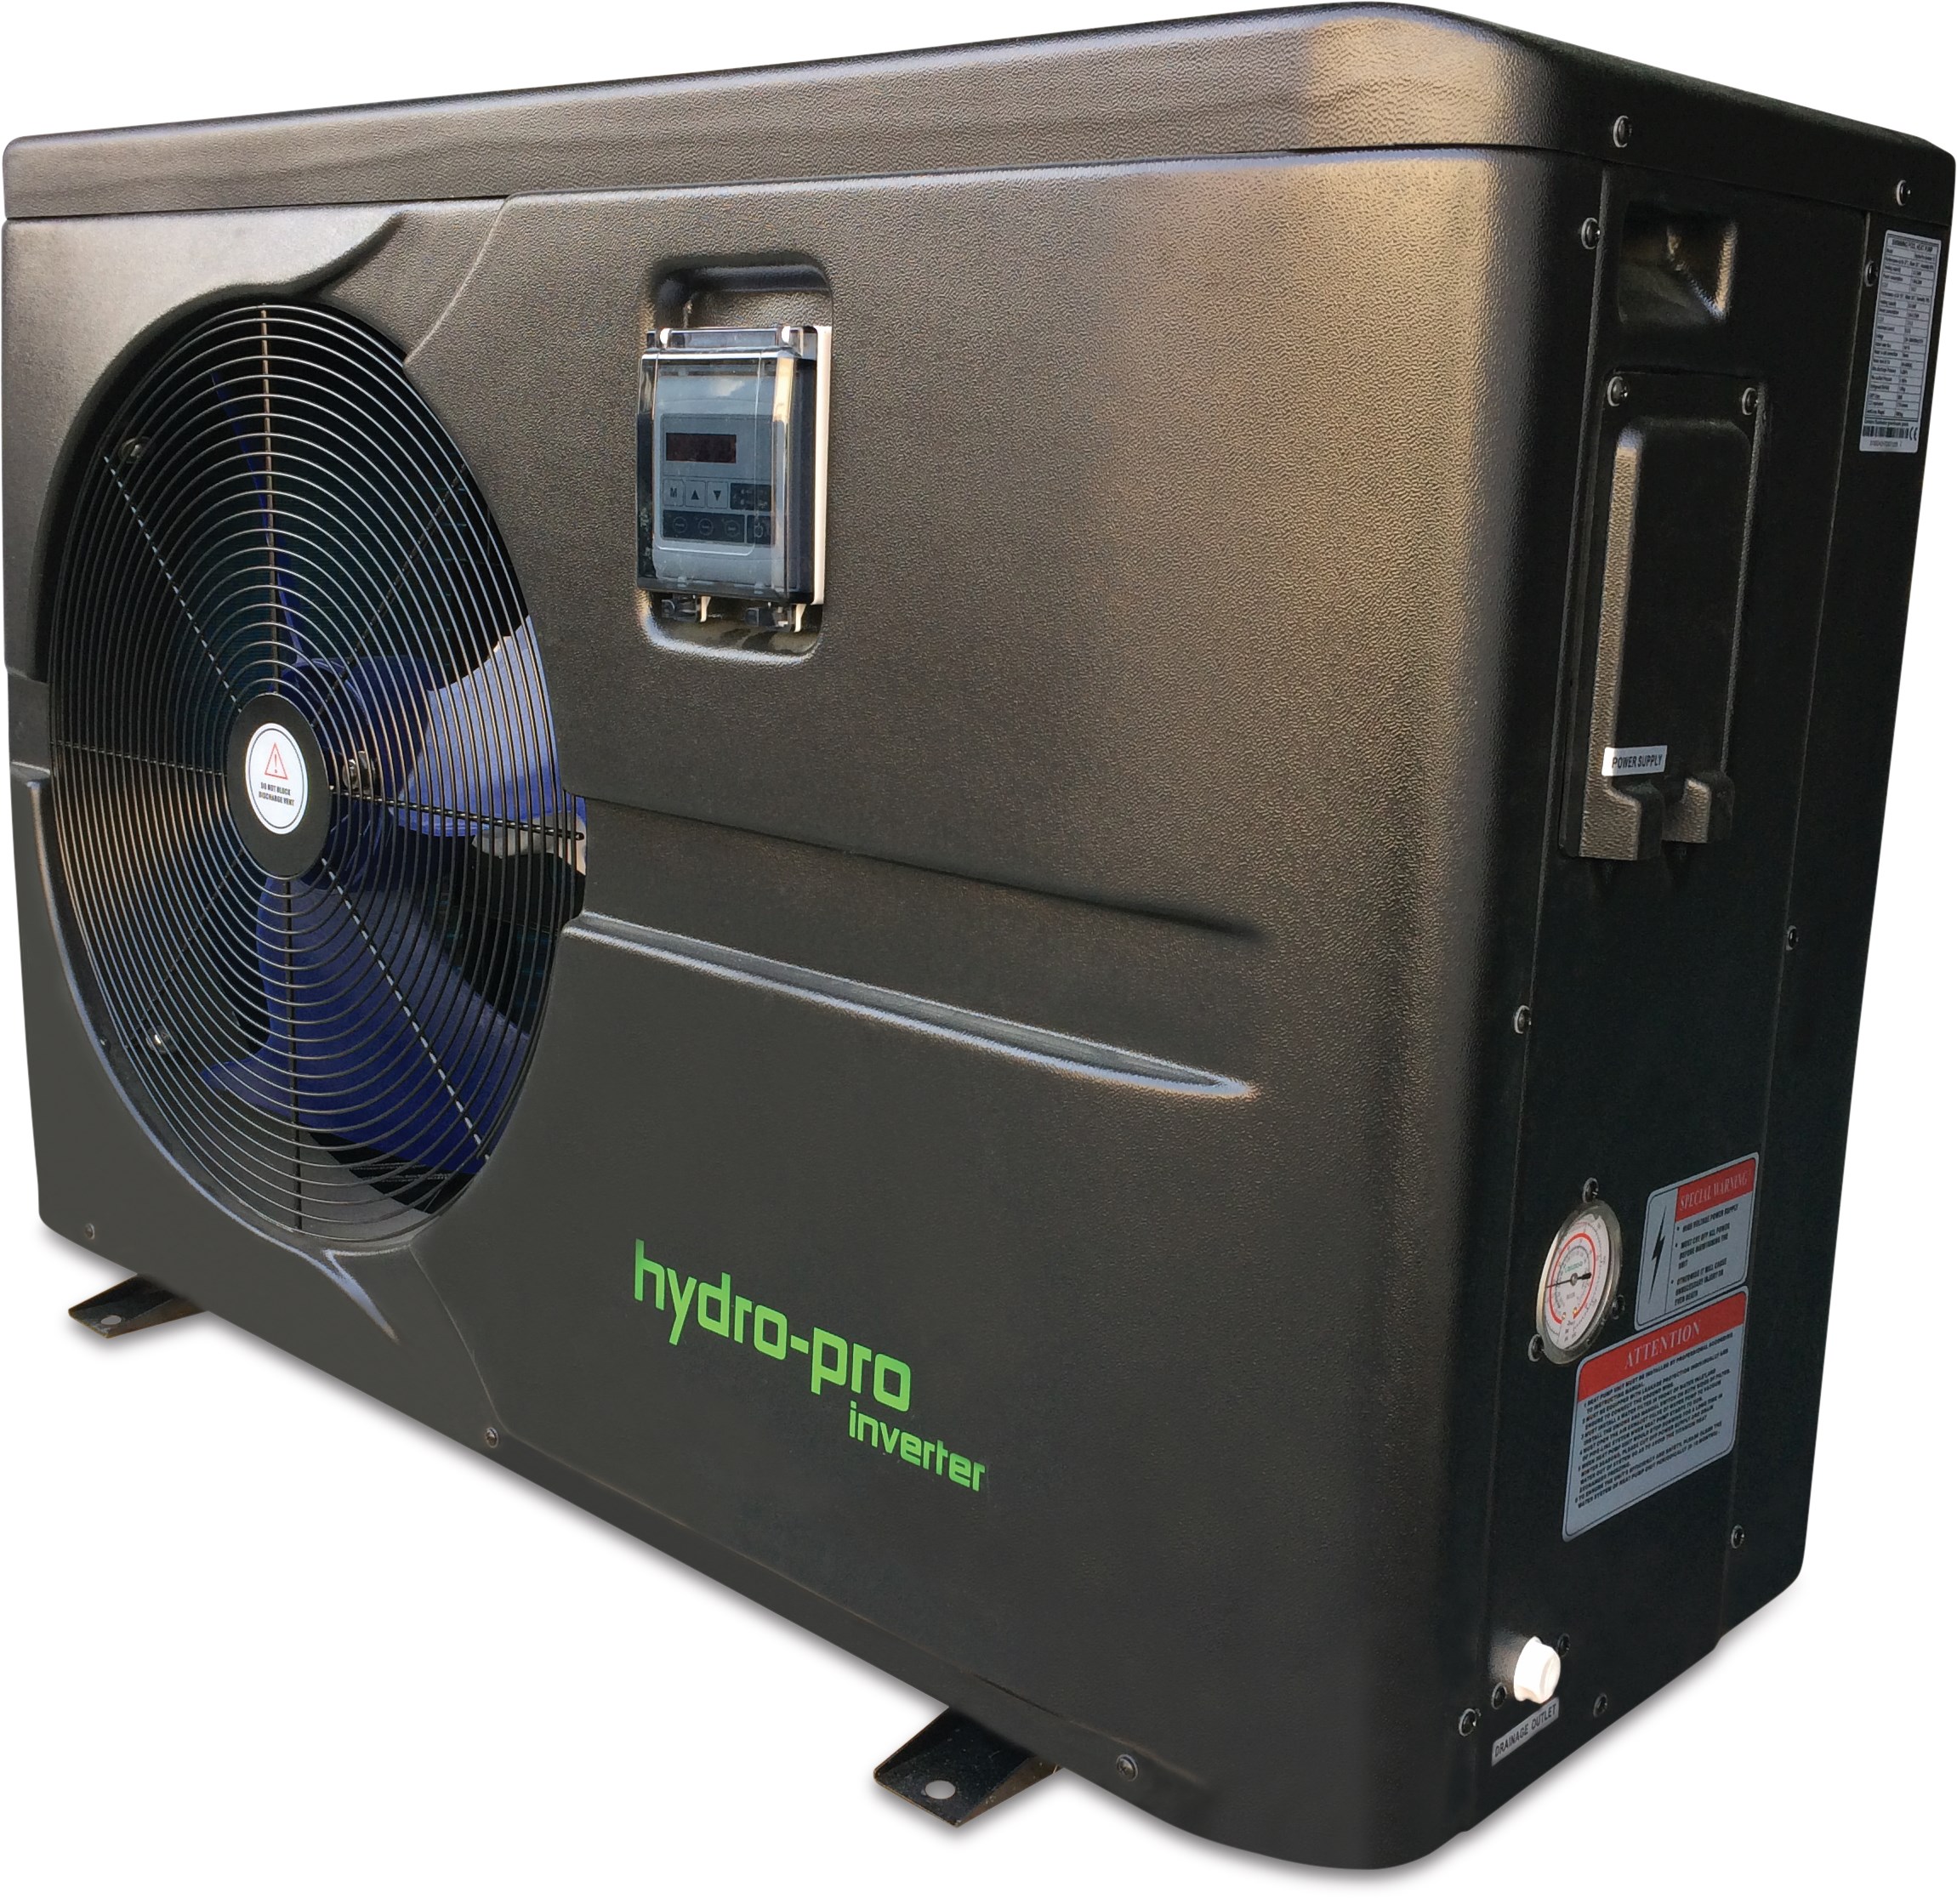 Hydro-Pro Heat pump Inverter Type Z Horizontal